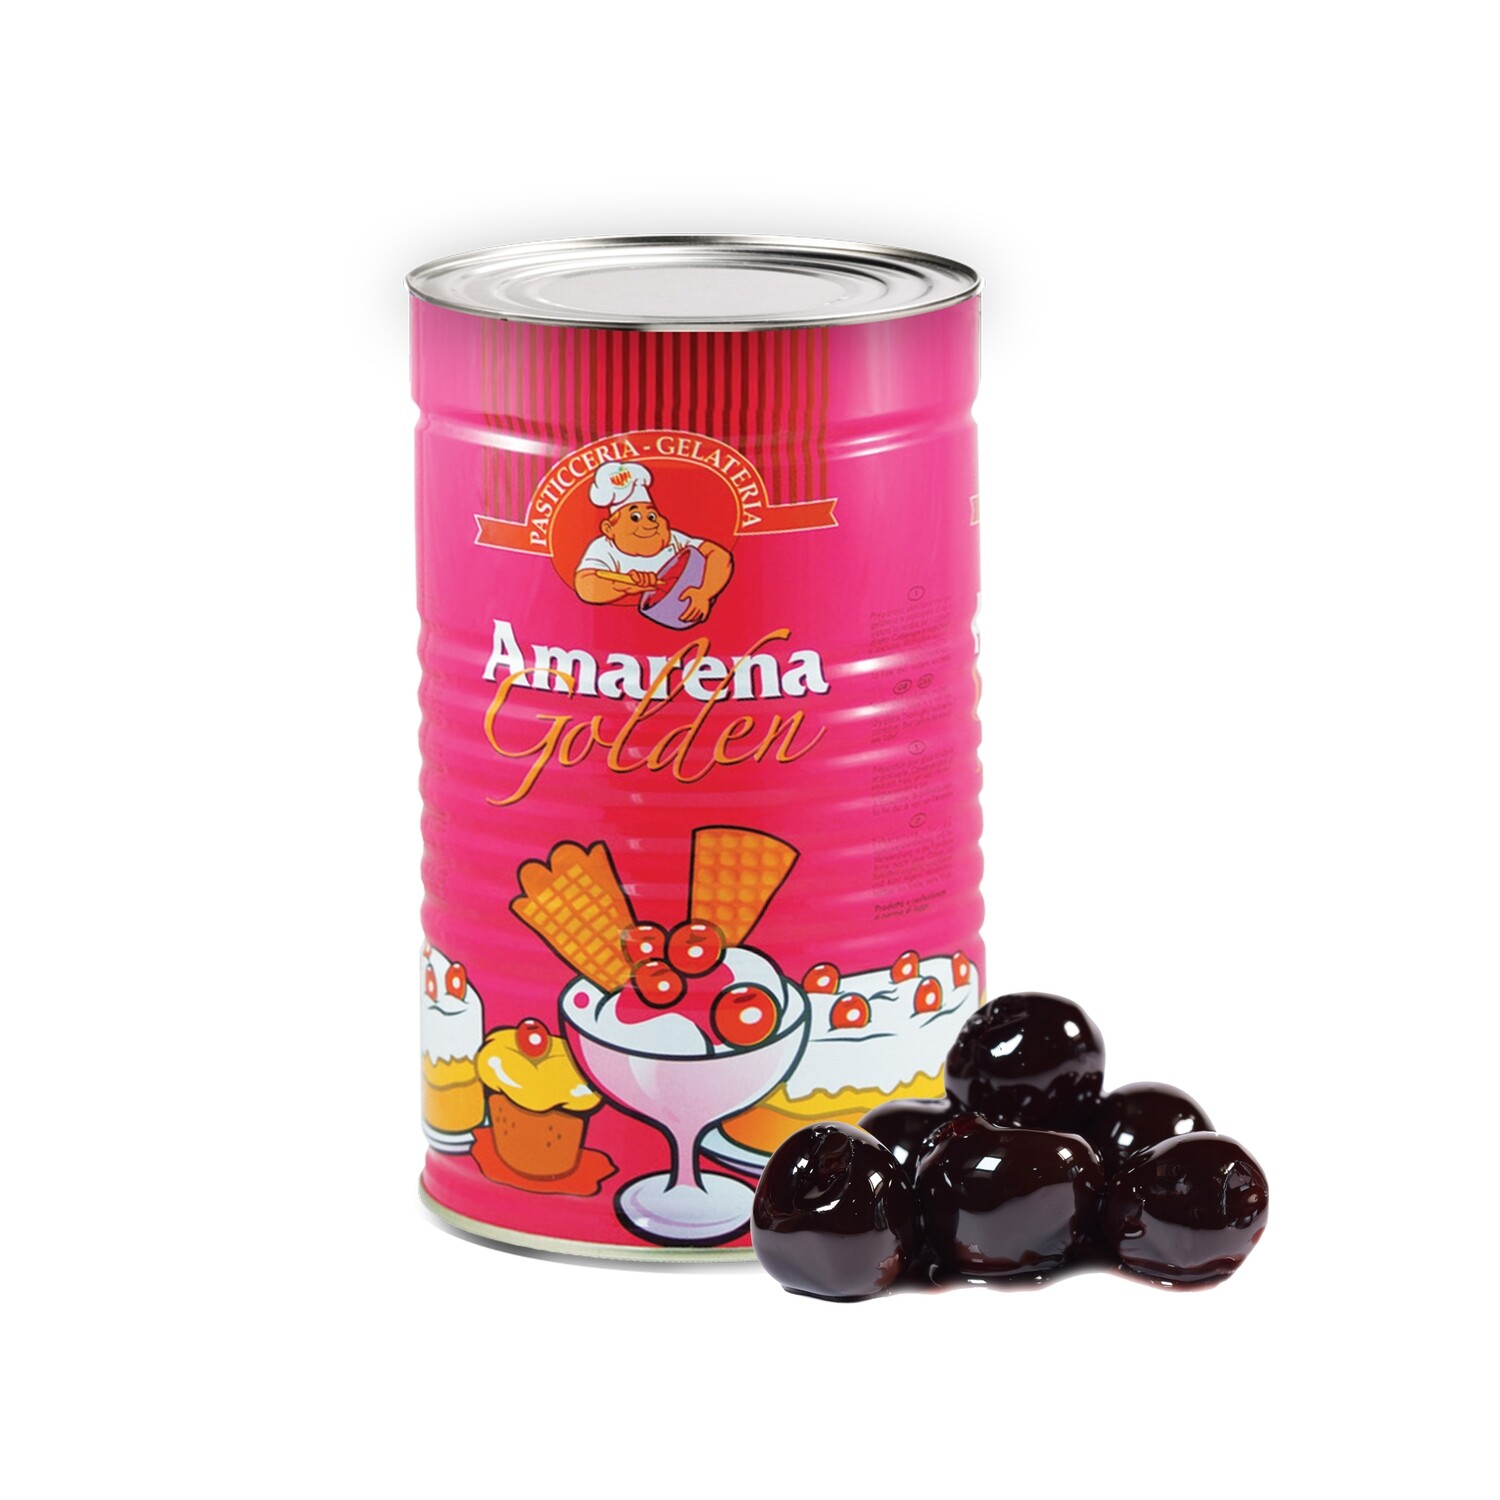 Nappi Amarena Cherries 5kg (11lbs) Can